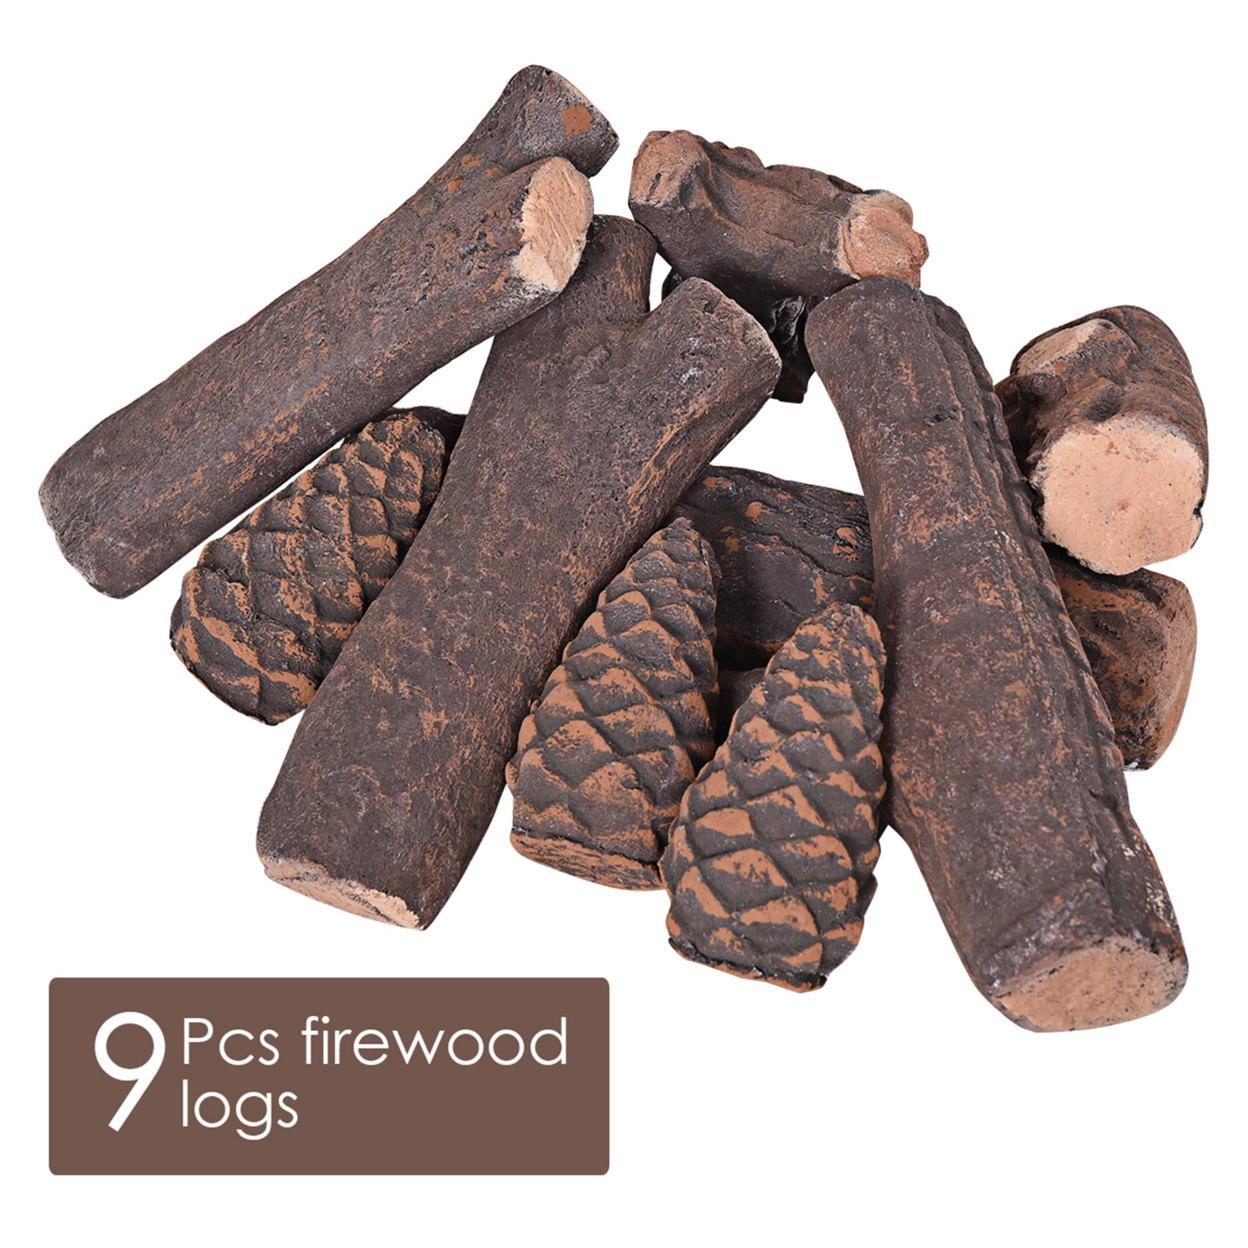 9 Pieces Gas Fireplace Log Set Ceramic Wood Logs Indoor Outdoor Use